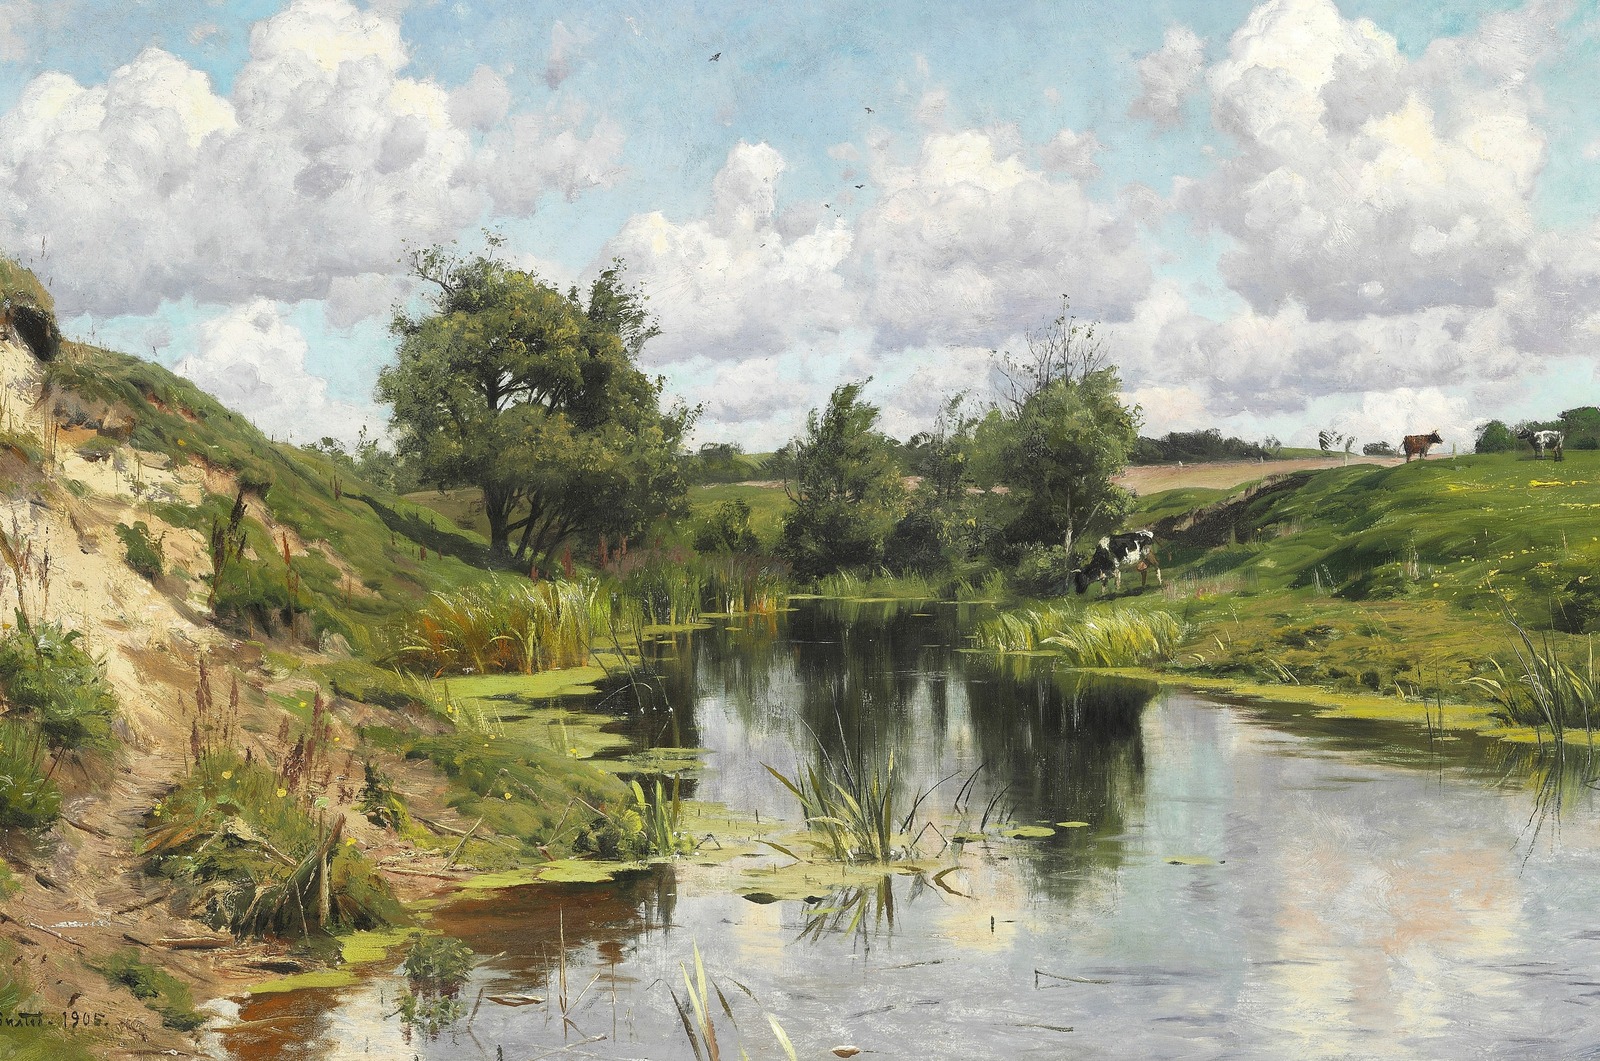 1905_Летний пейзаж с пасущимися коровами (Summer landscape with grazing cows at a watering hole)_53 х 79_х.,м._Частное собрание